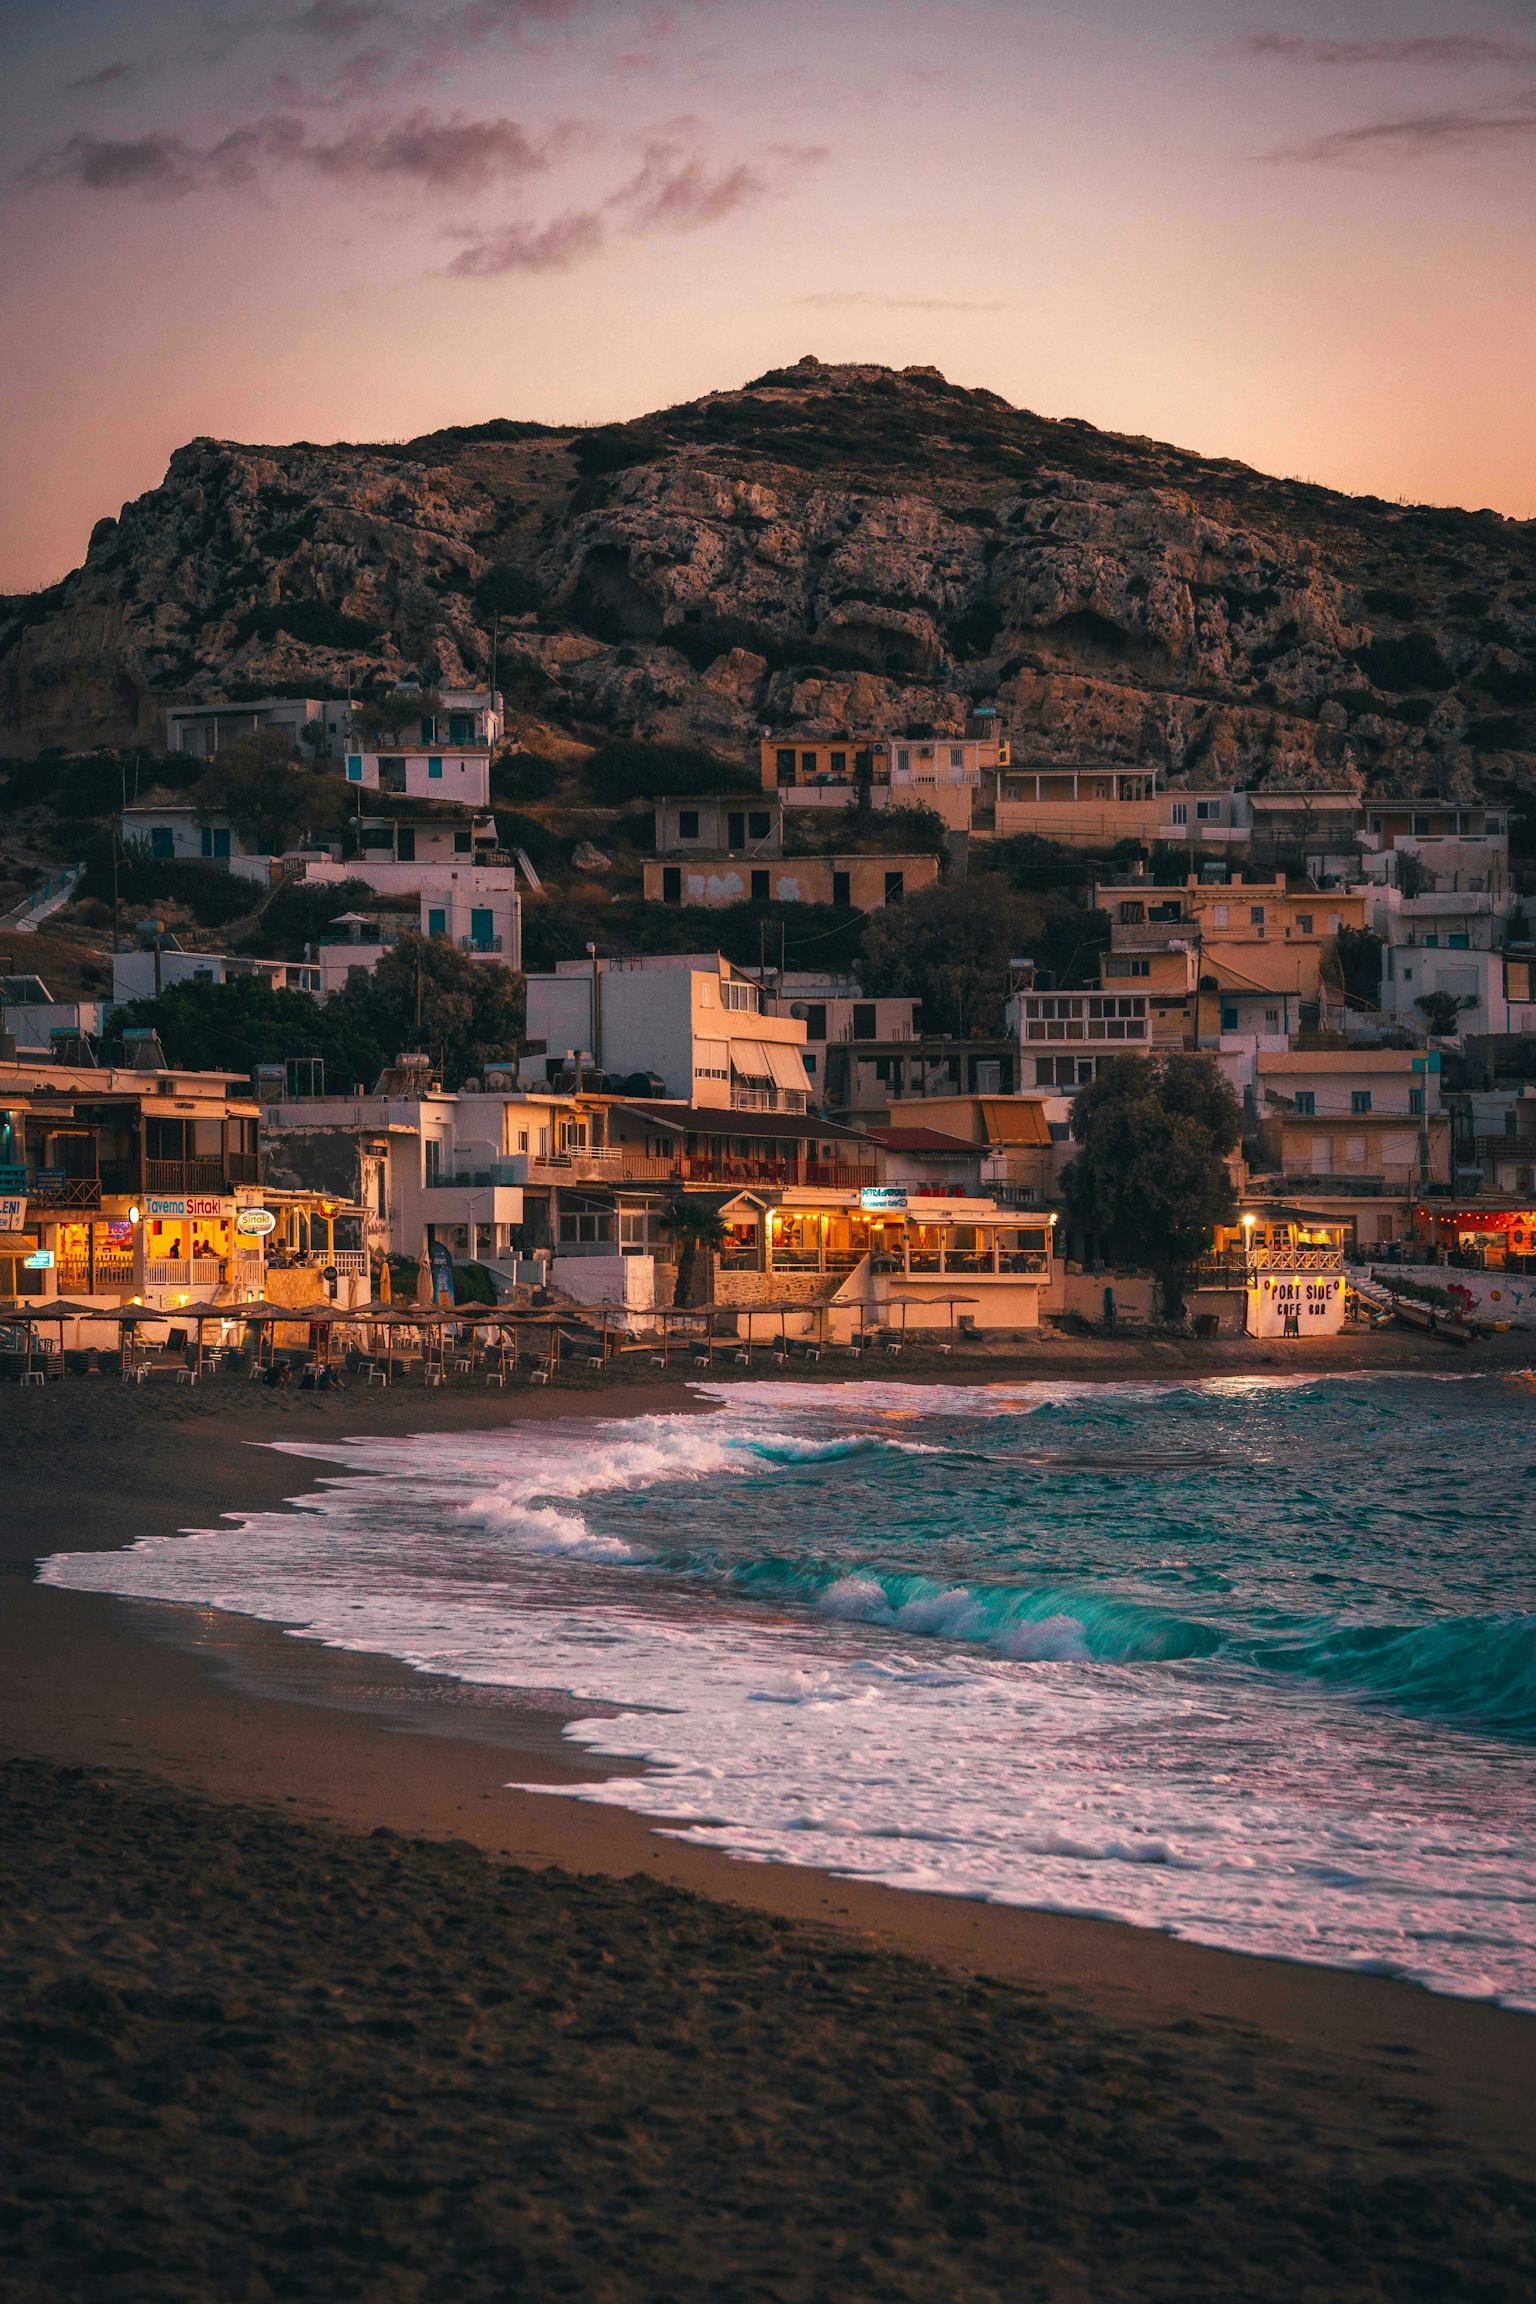 Crete Across the Seasons: A Year-Round Paradise